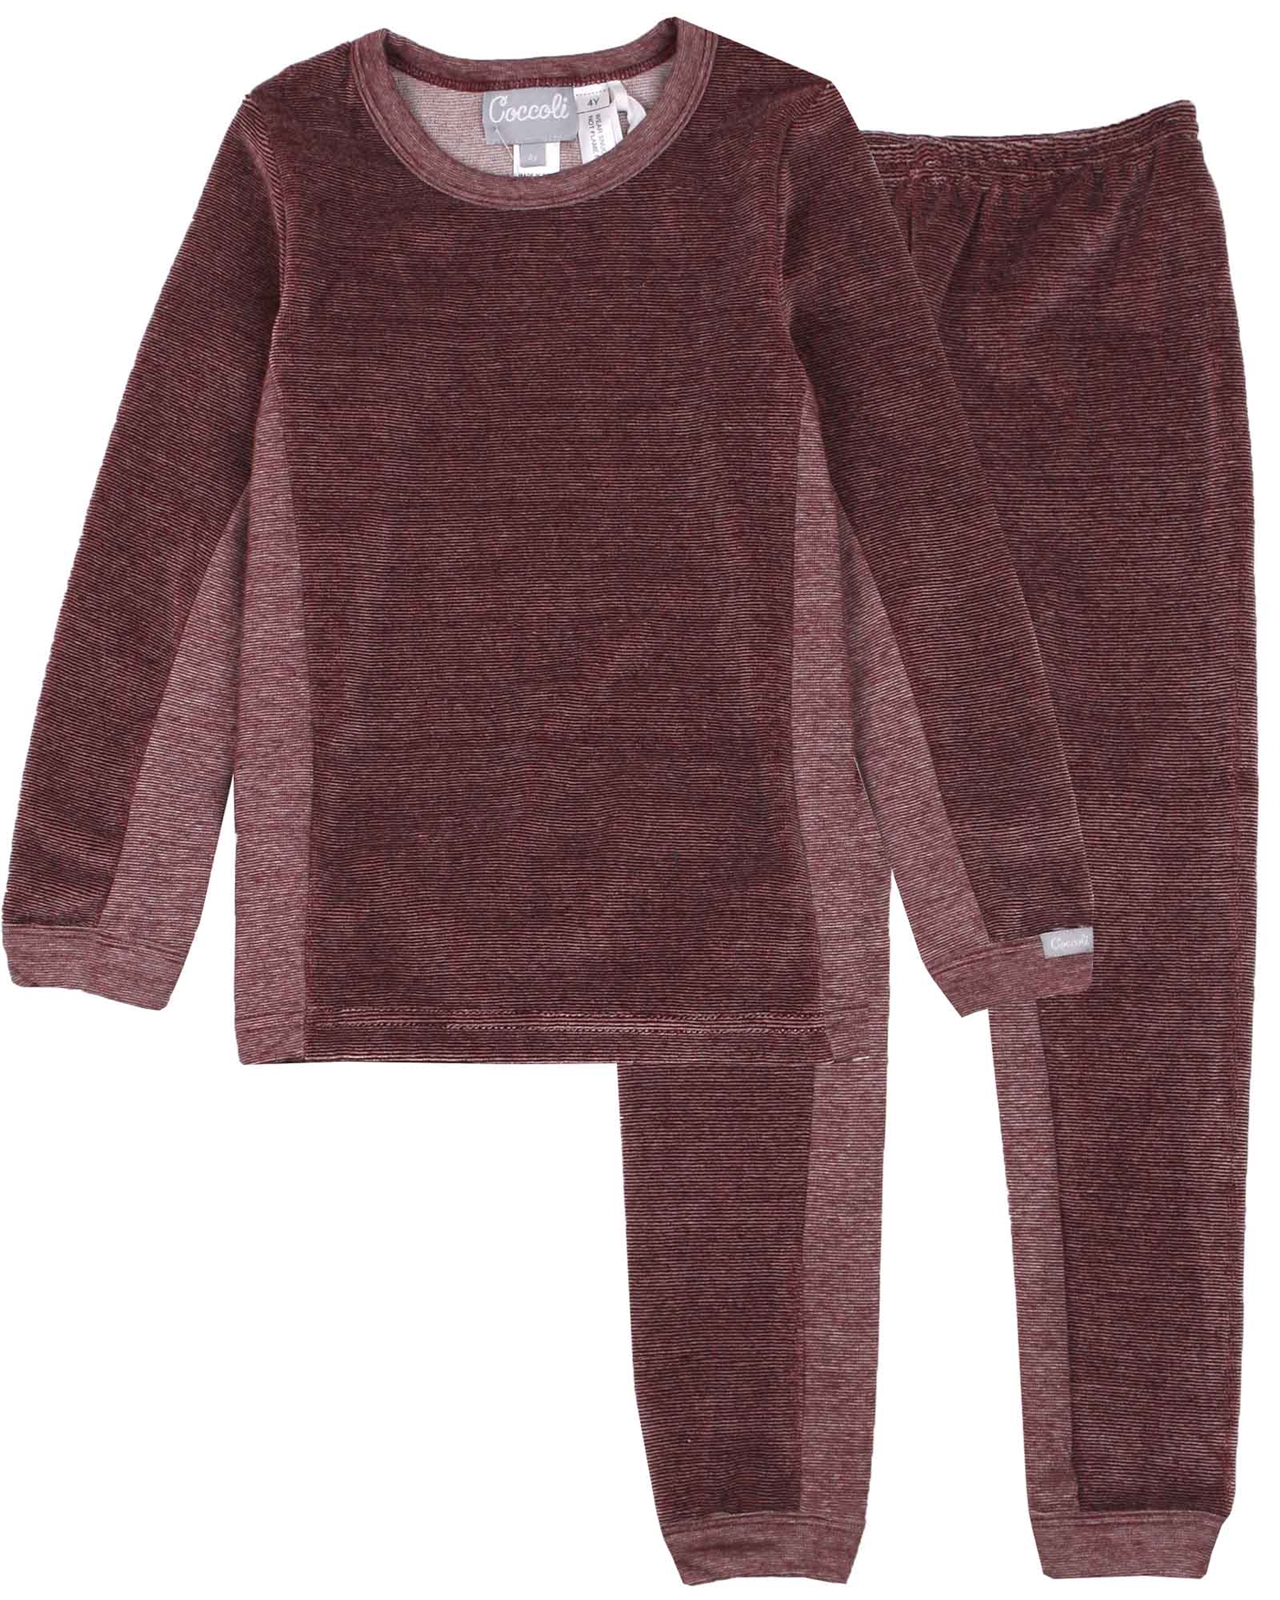 COCCOLI Girls' Velour Pyjamas Set in Rose - Coccoli Sleepwear - Coccoli ...